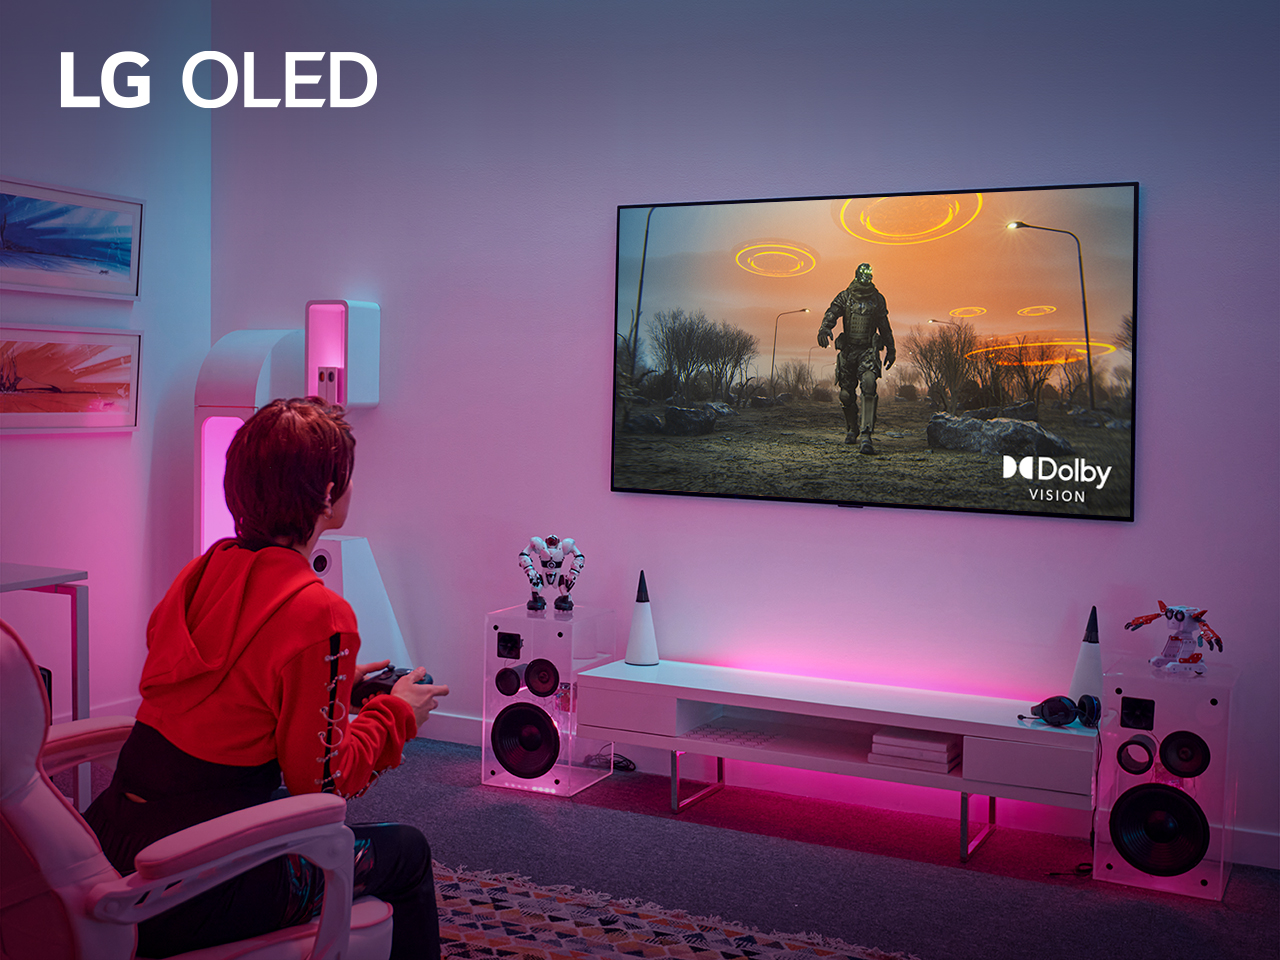 LG-OLED-TV-Dolby-Vision.jpg